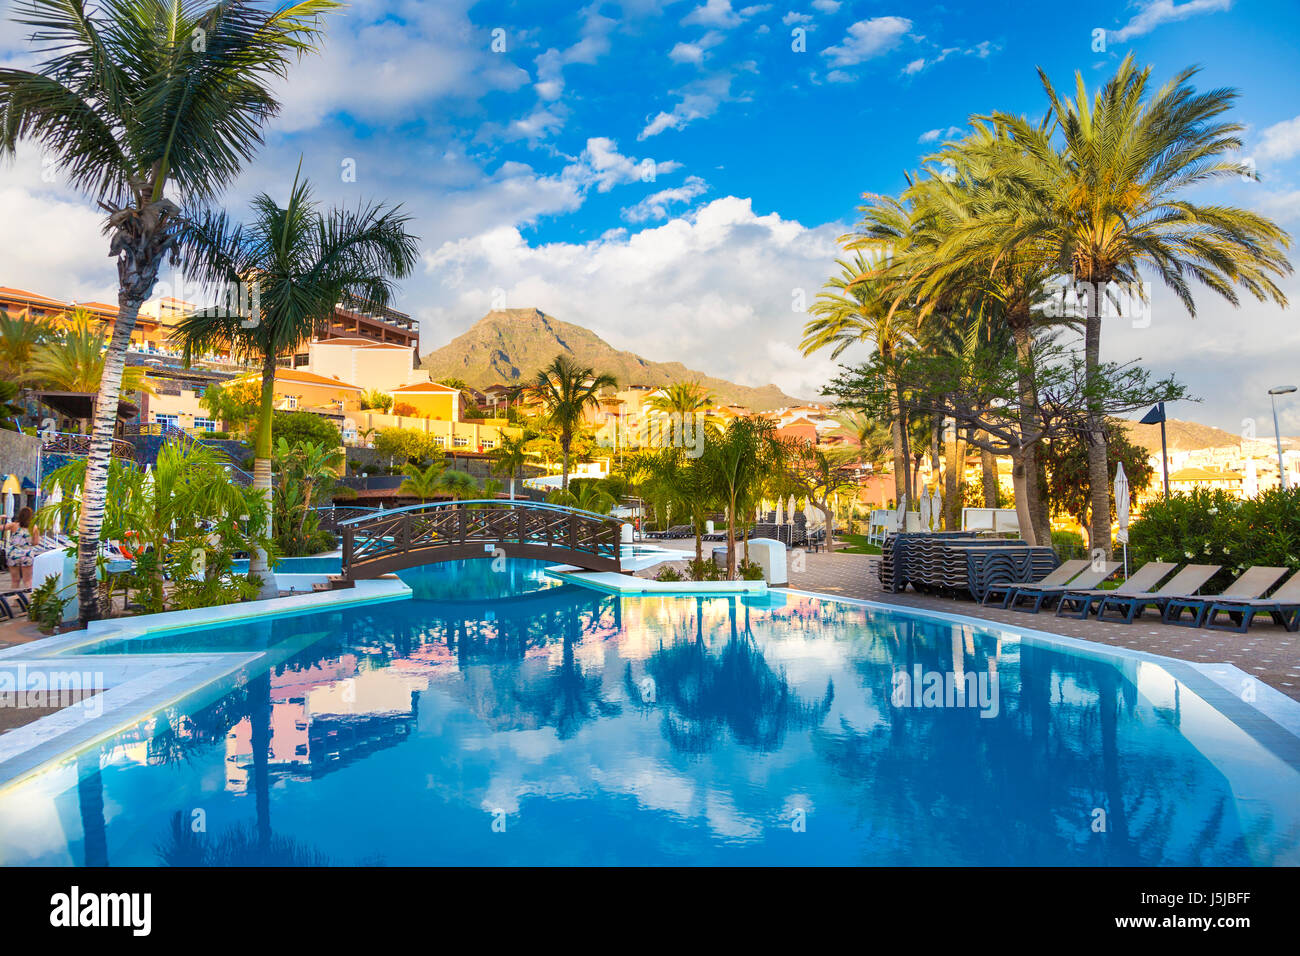 Resort with swimming pool in Tenerife, Spain Stock Photo